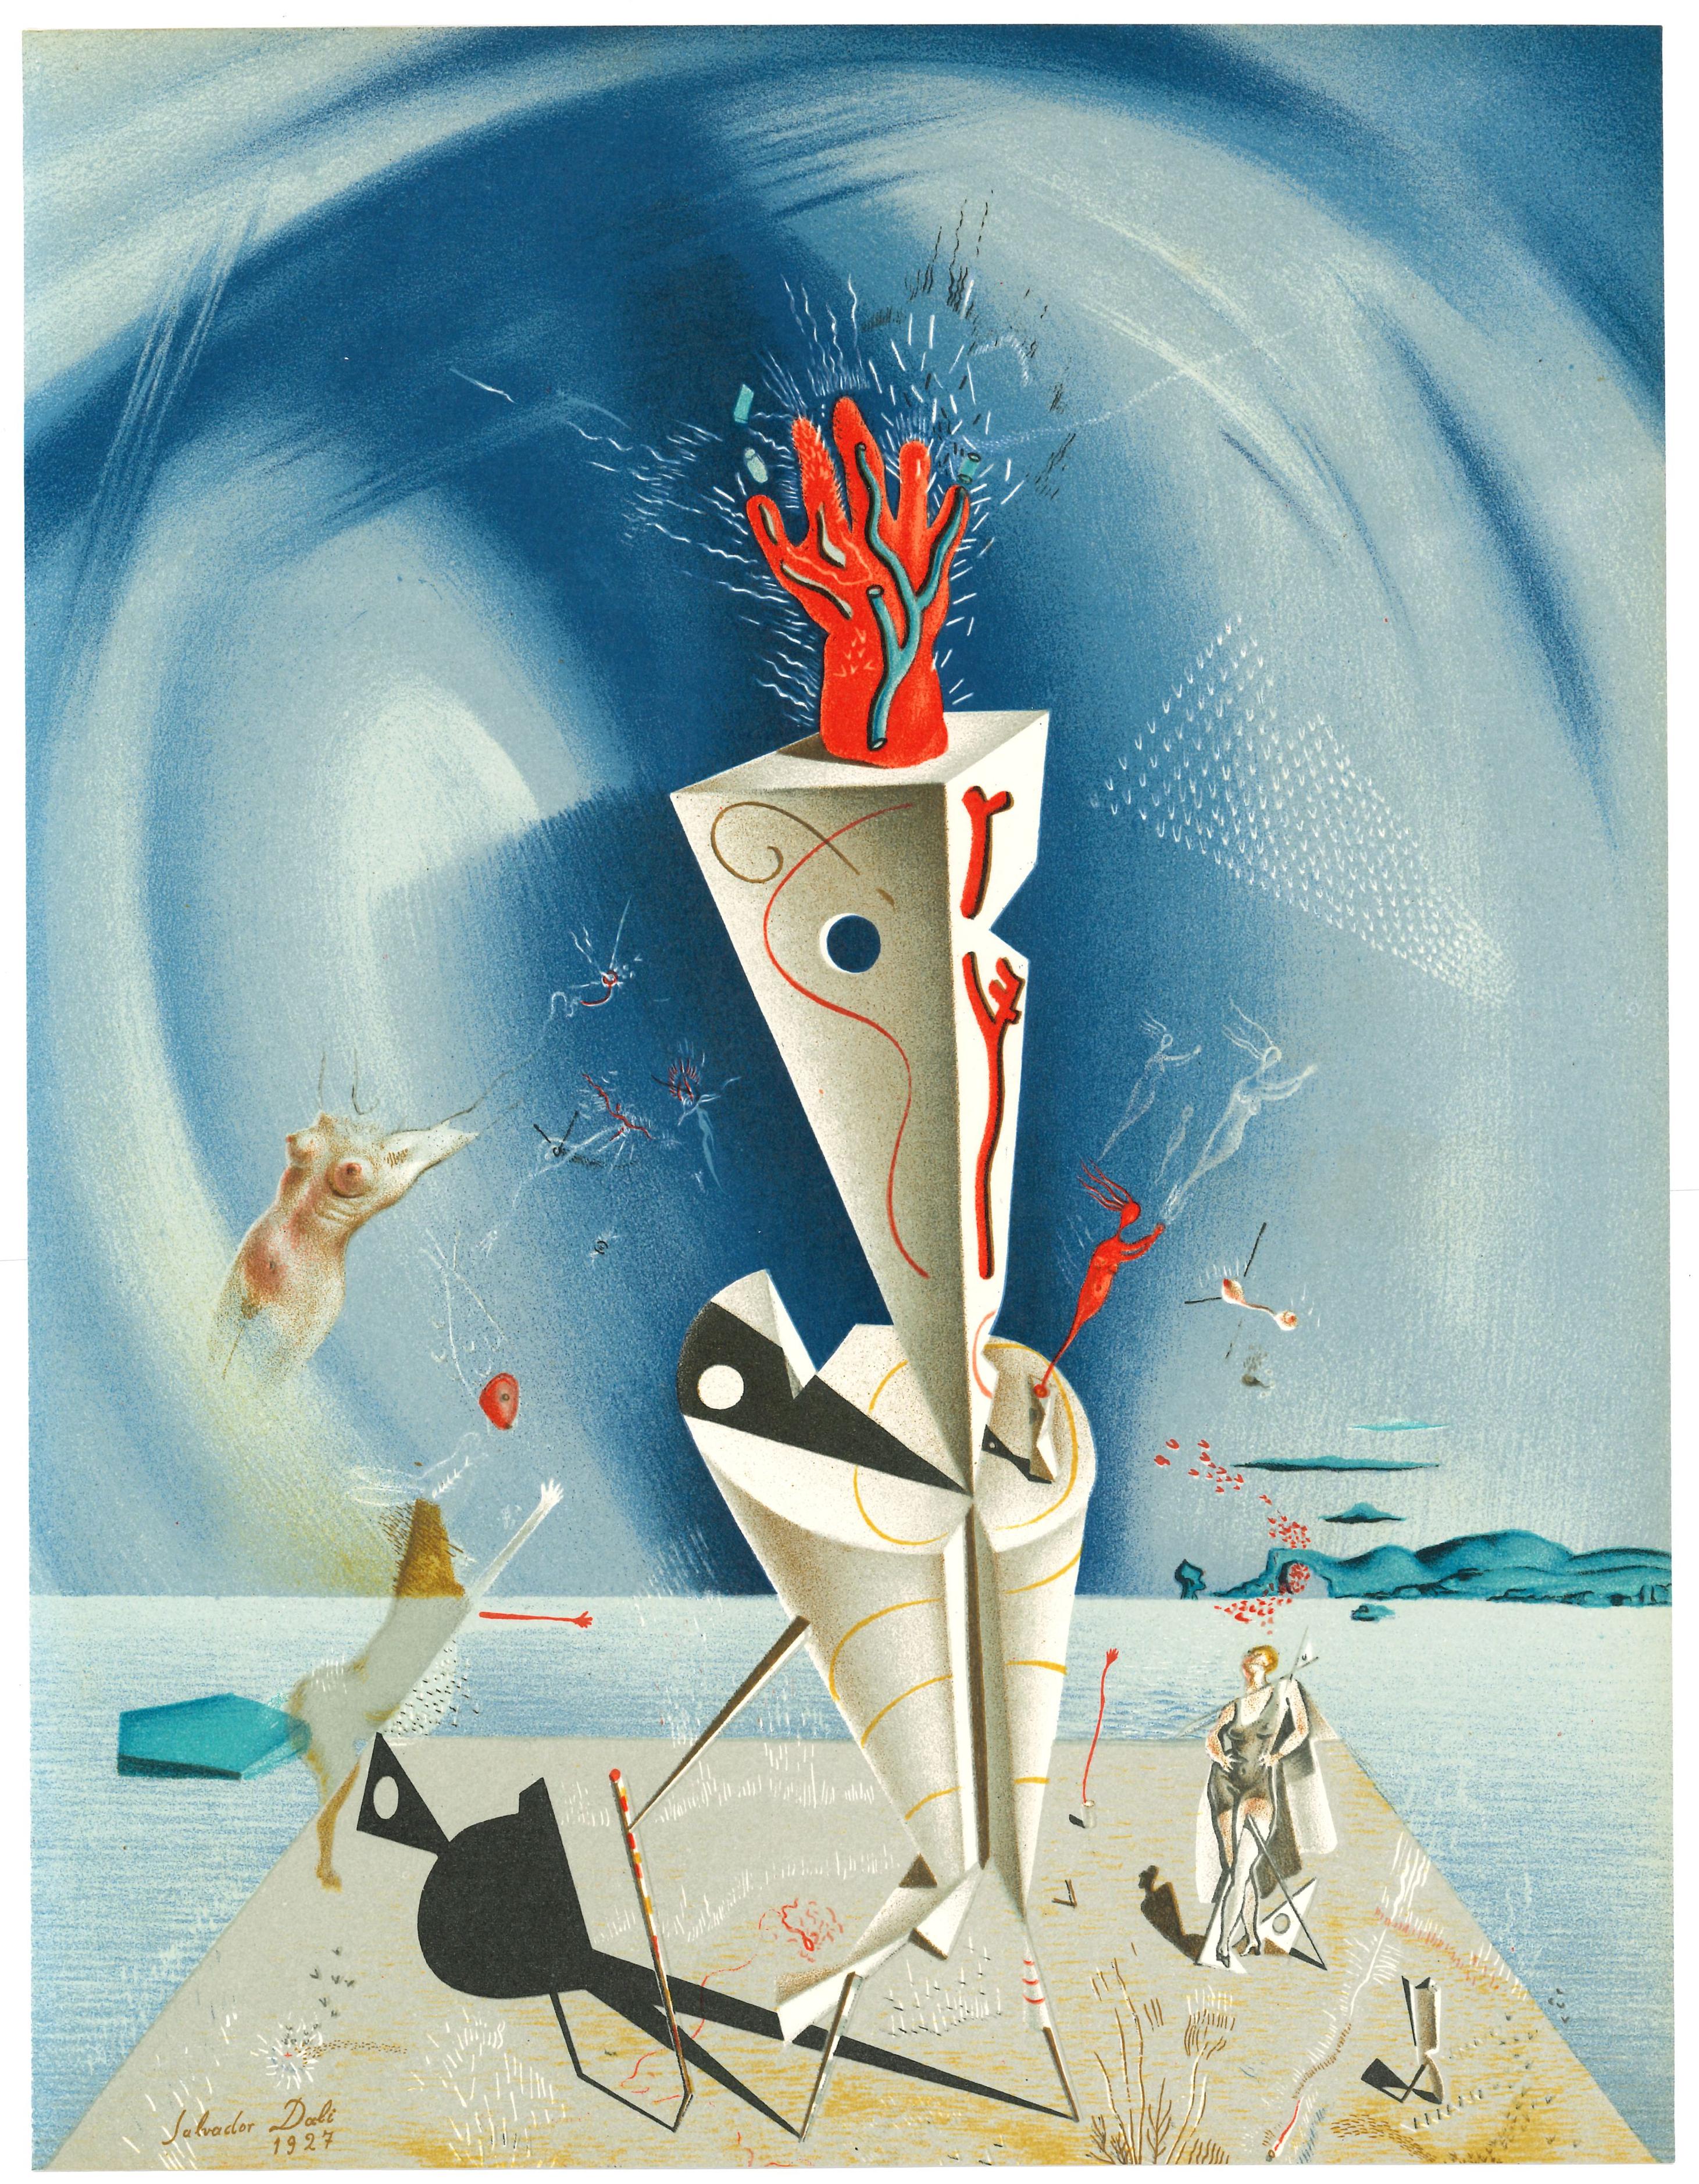 Salvador Dalí Print - Appareil et Main - Lithograph after Salvador Dalì - 1974